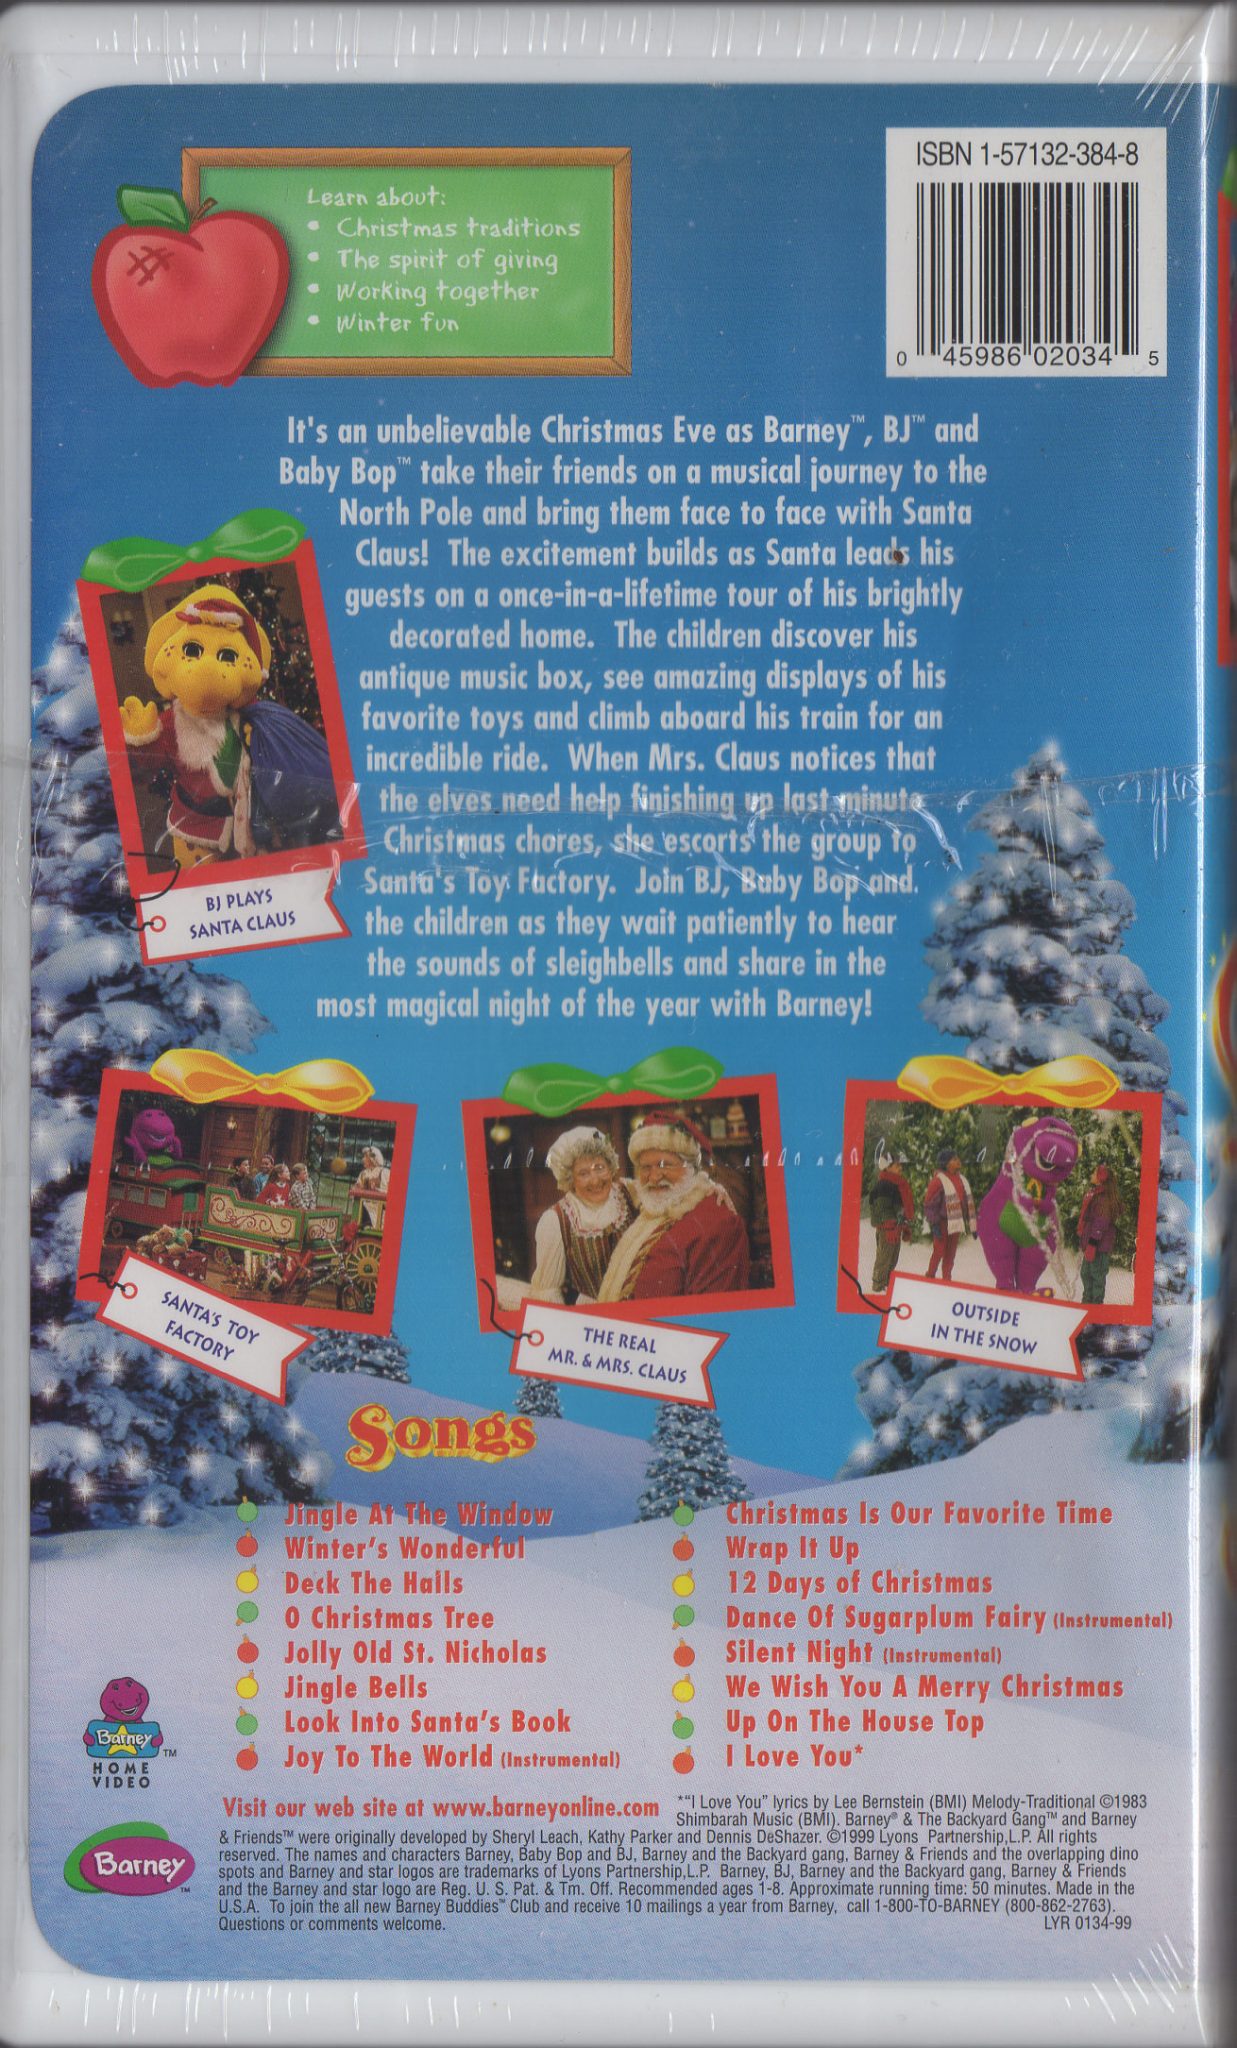 Barney Night Before Christmas Dvd Cover